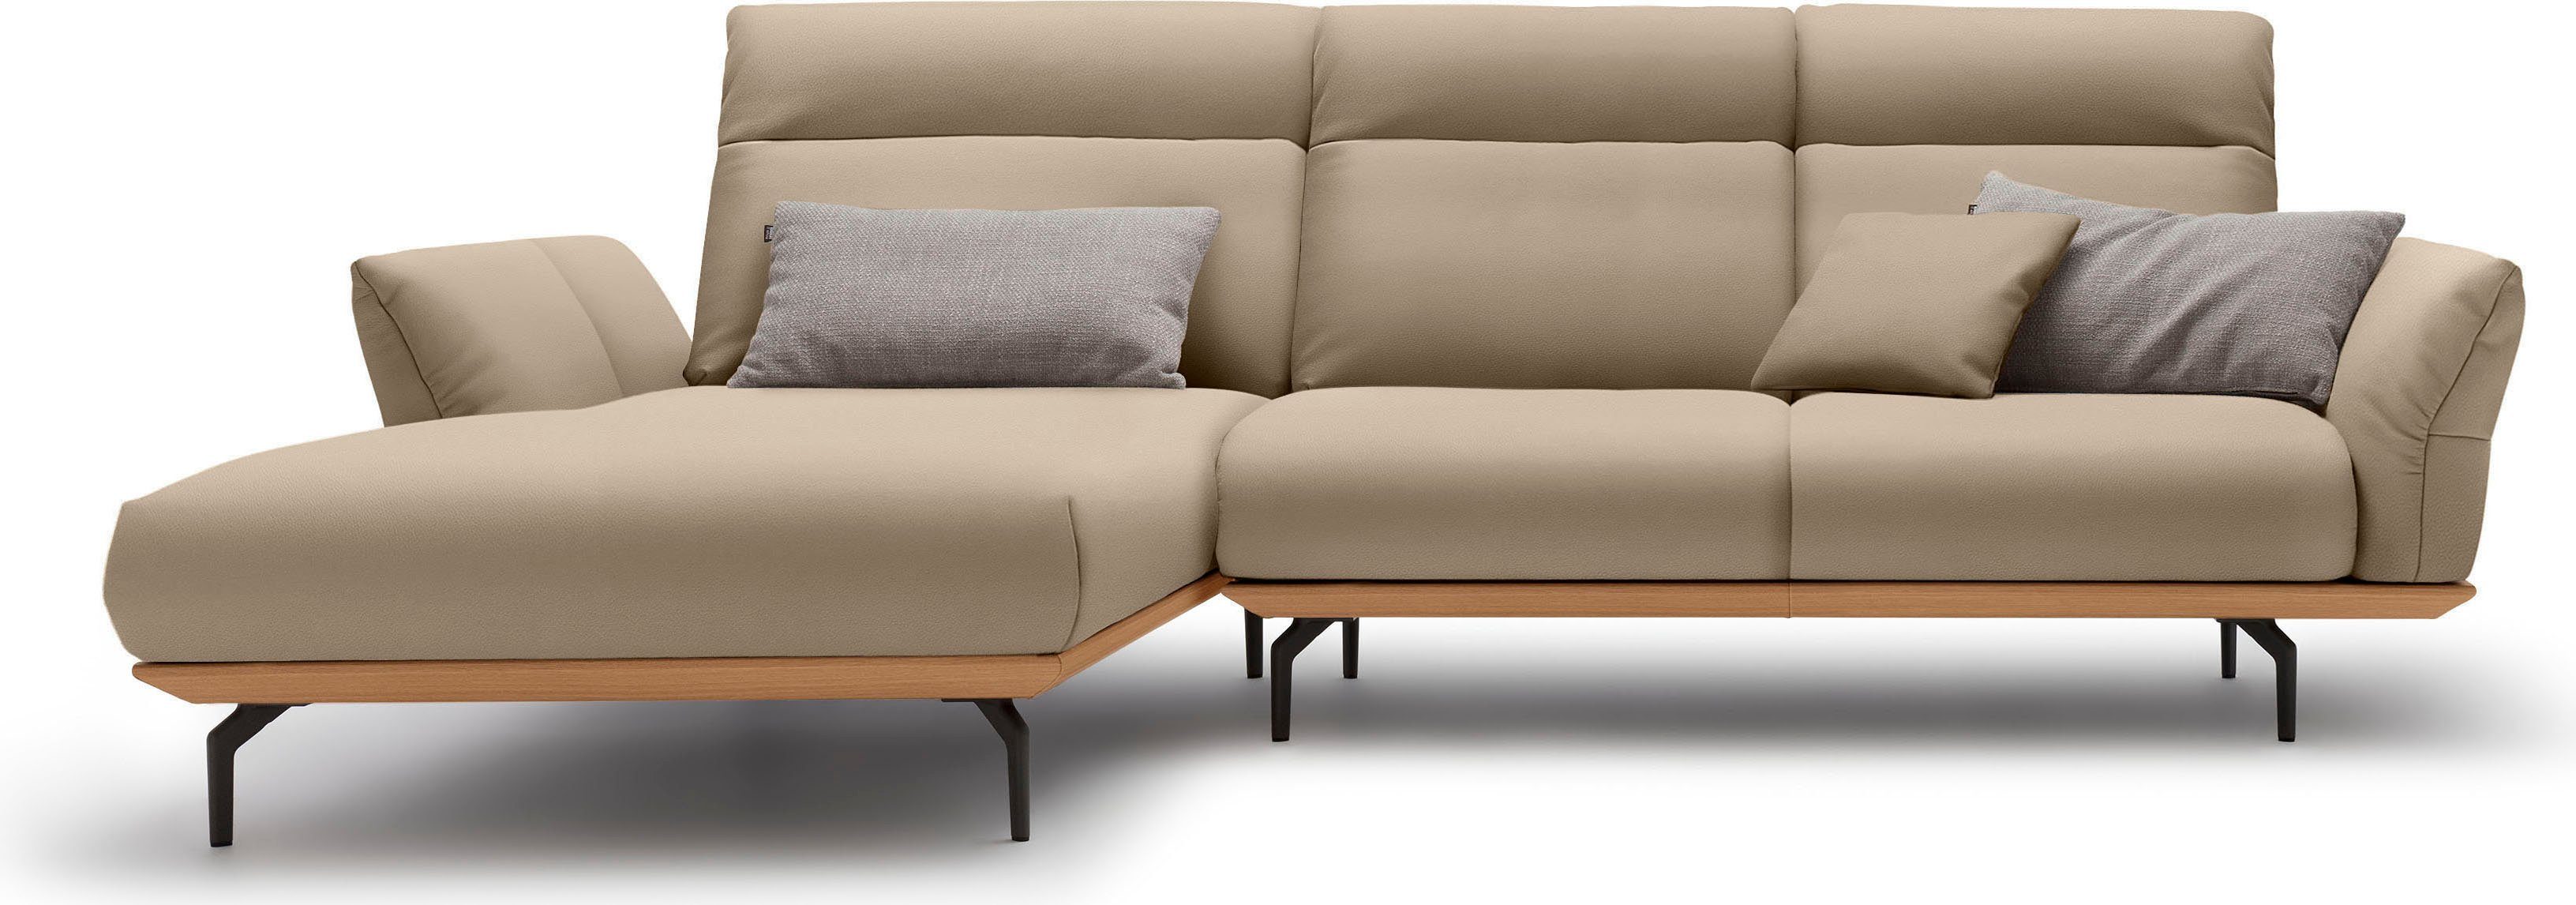 hülsta sofa Ecksofa hs.460, Sockel in Eiche, Alugussfüße in umbragrau, Breite 298 cm